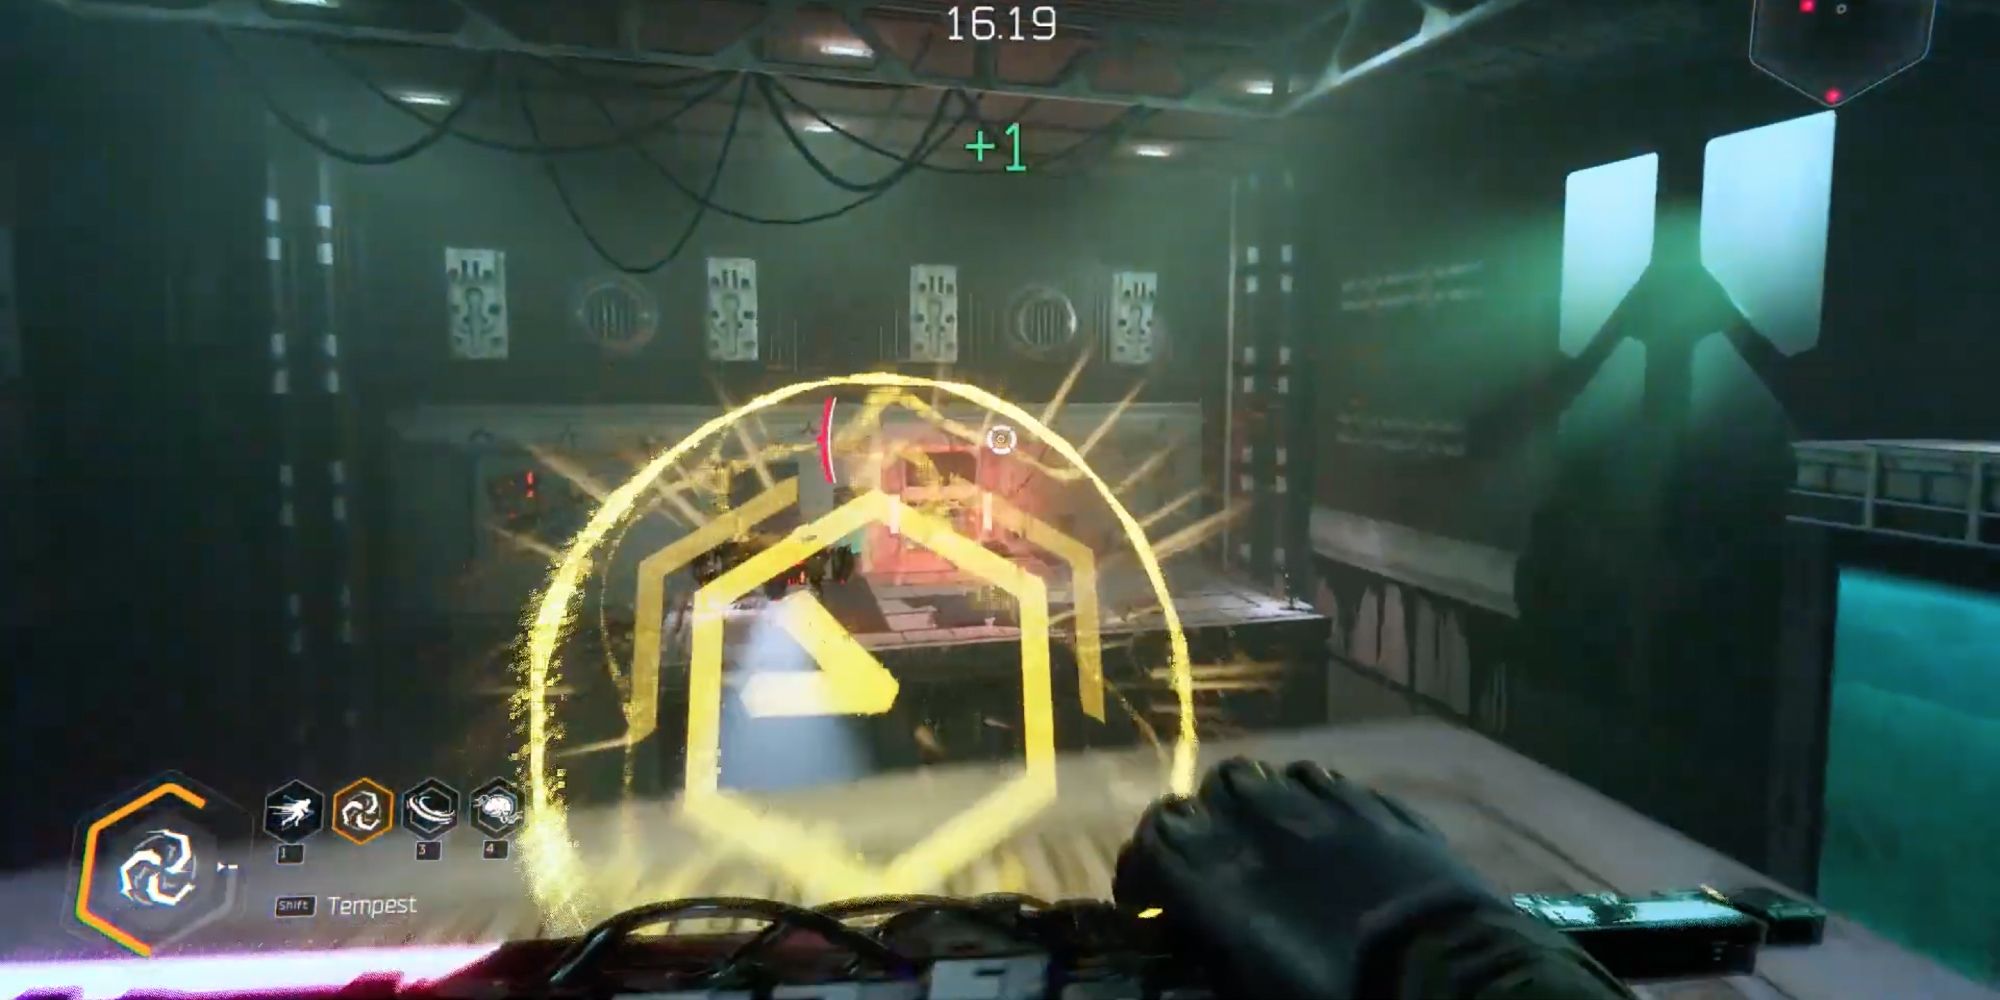 Ghostrunner - Get Better at Kill Run Mode - Player achieves Master rank in Kill Run mode